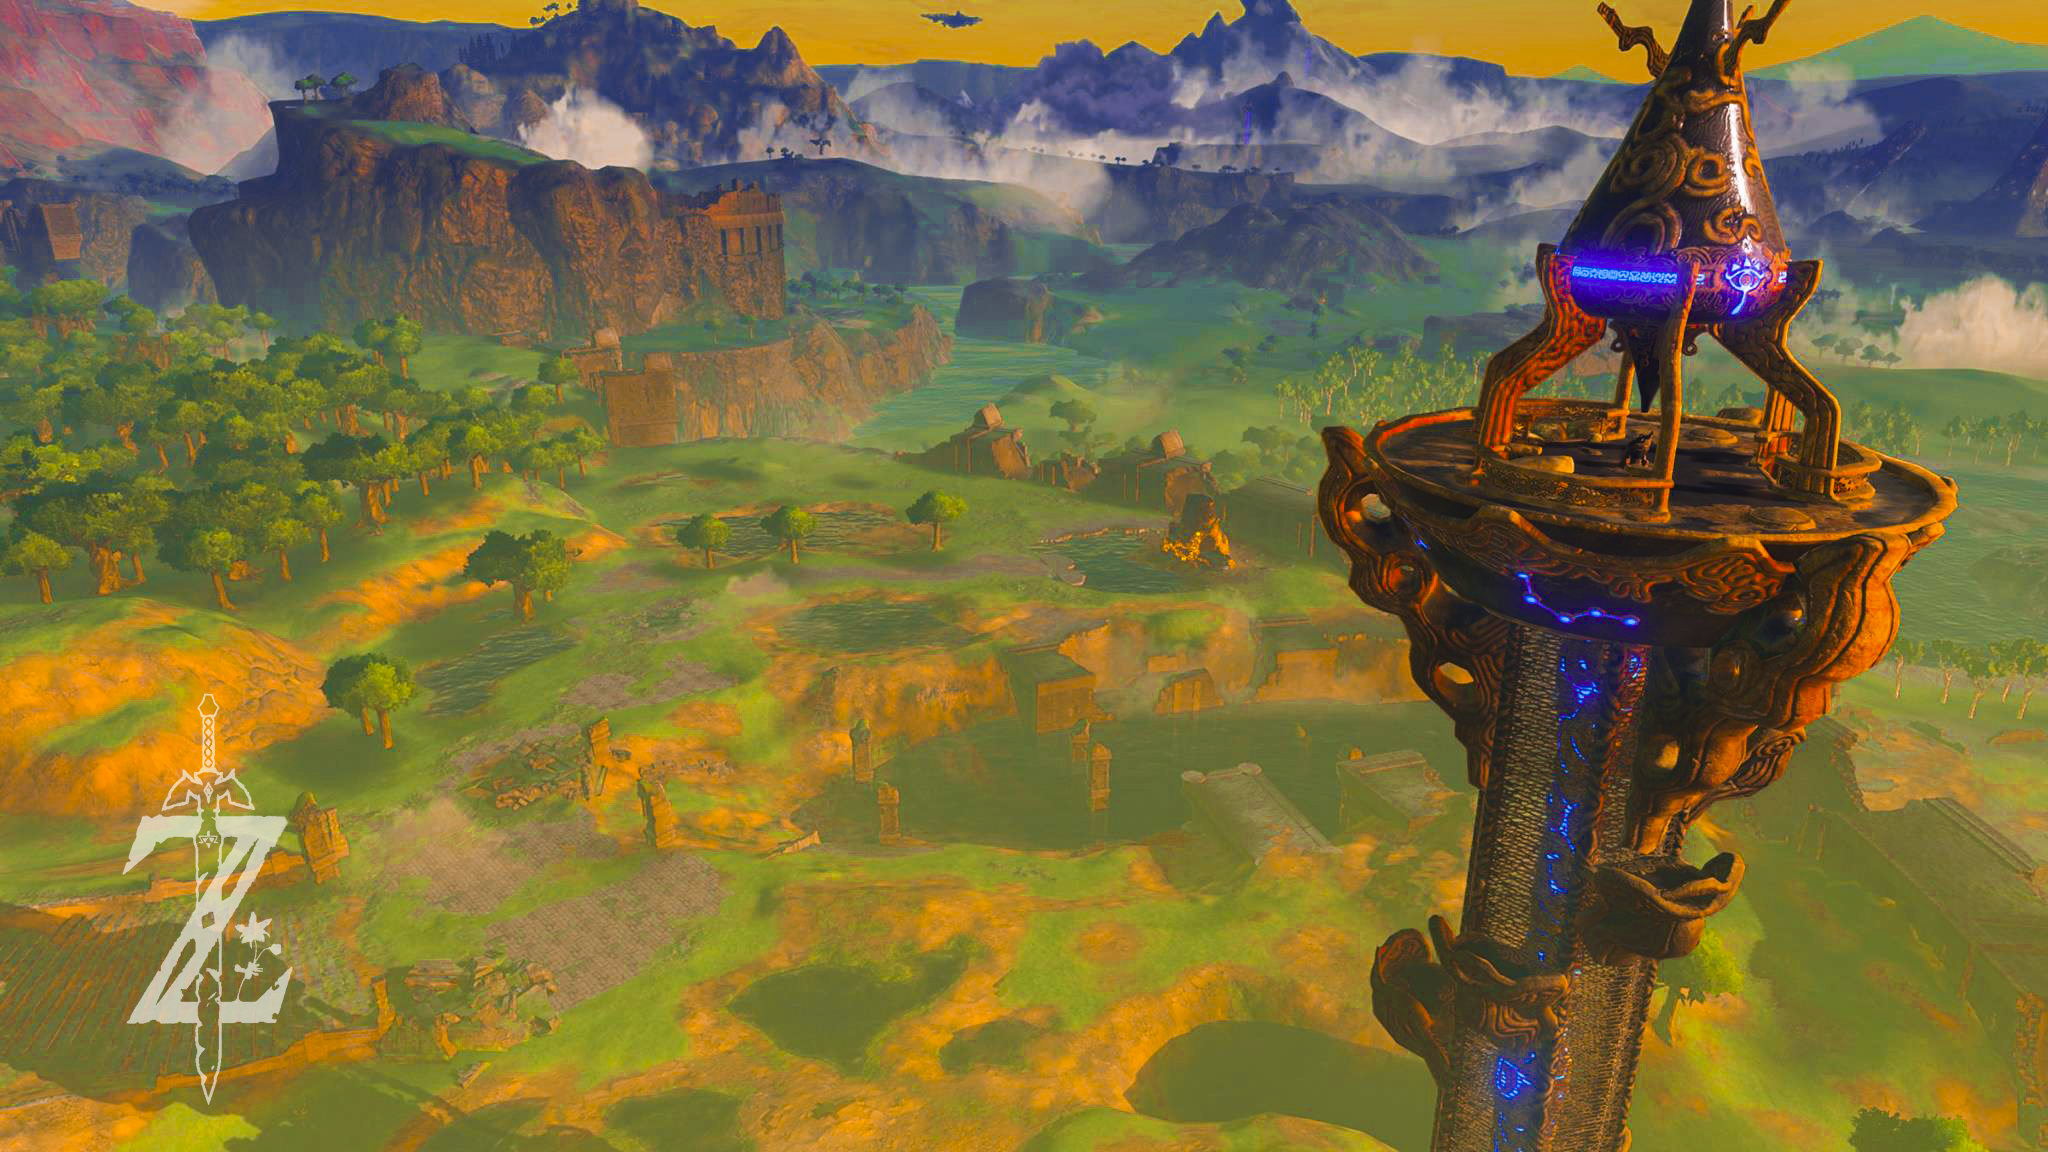 legend of zelda breath of the wild wallpaper,sky,screenshot,adventure game,games,strategy video game